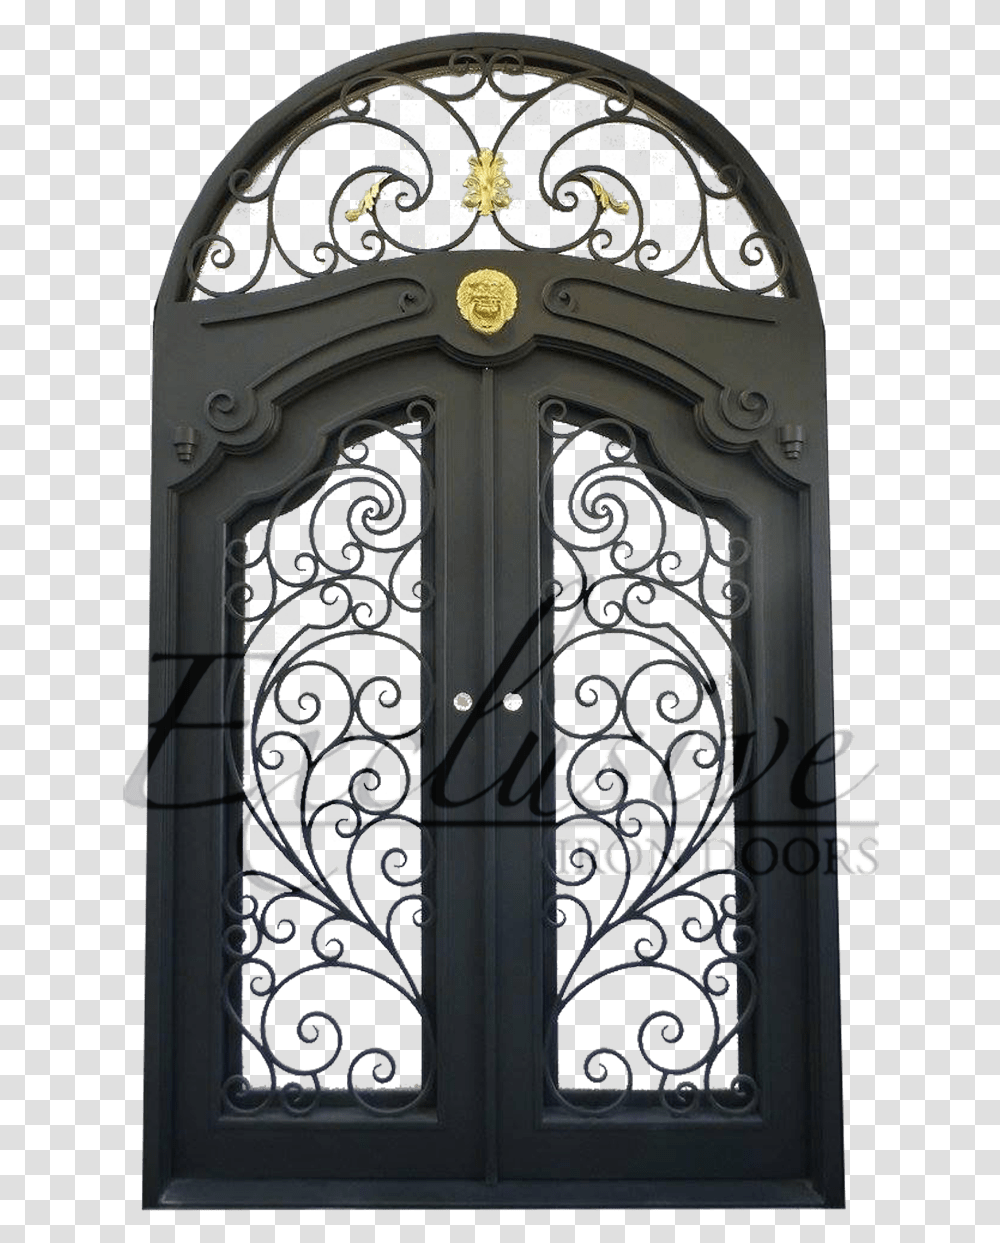 Iron Gate Amp Window Download Iron Door And Window, French Door Transparent Png